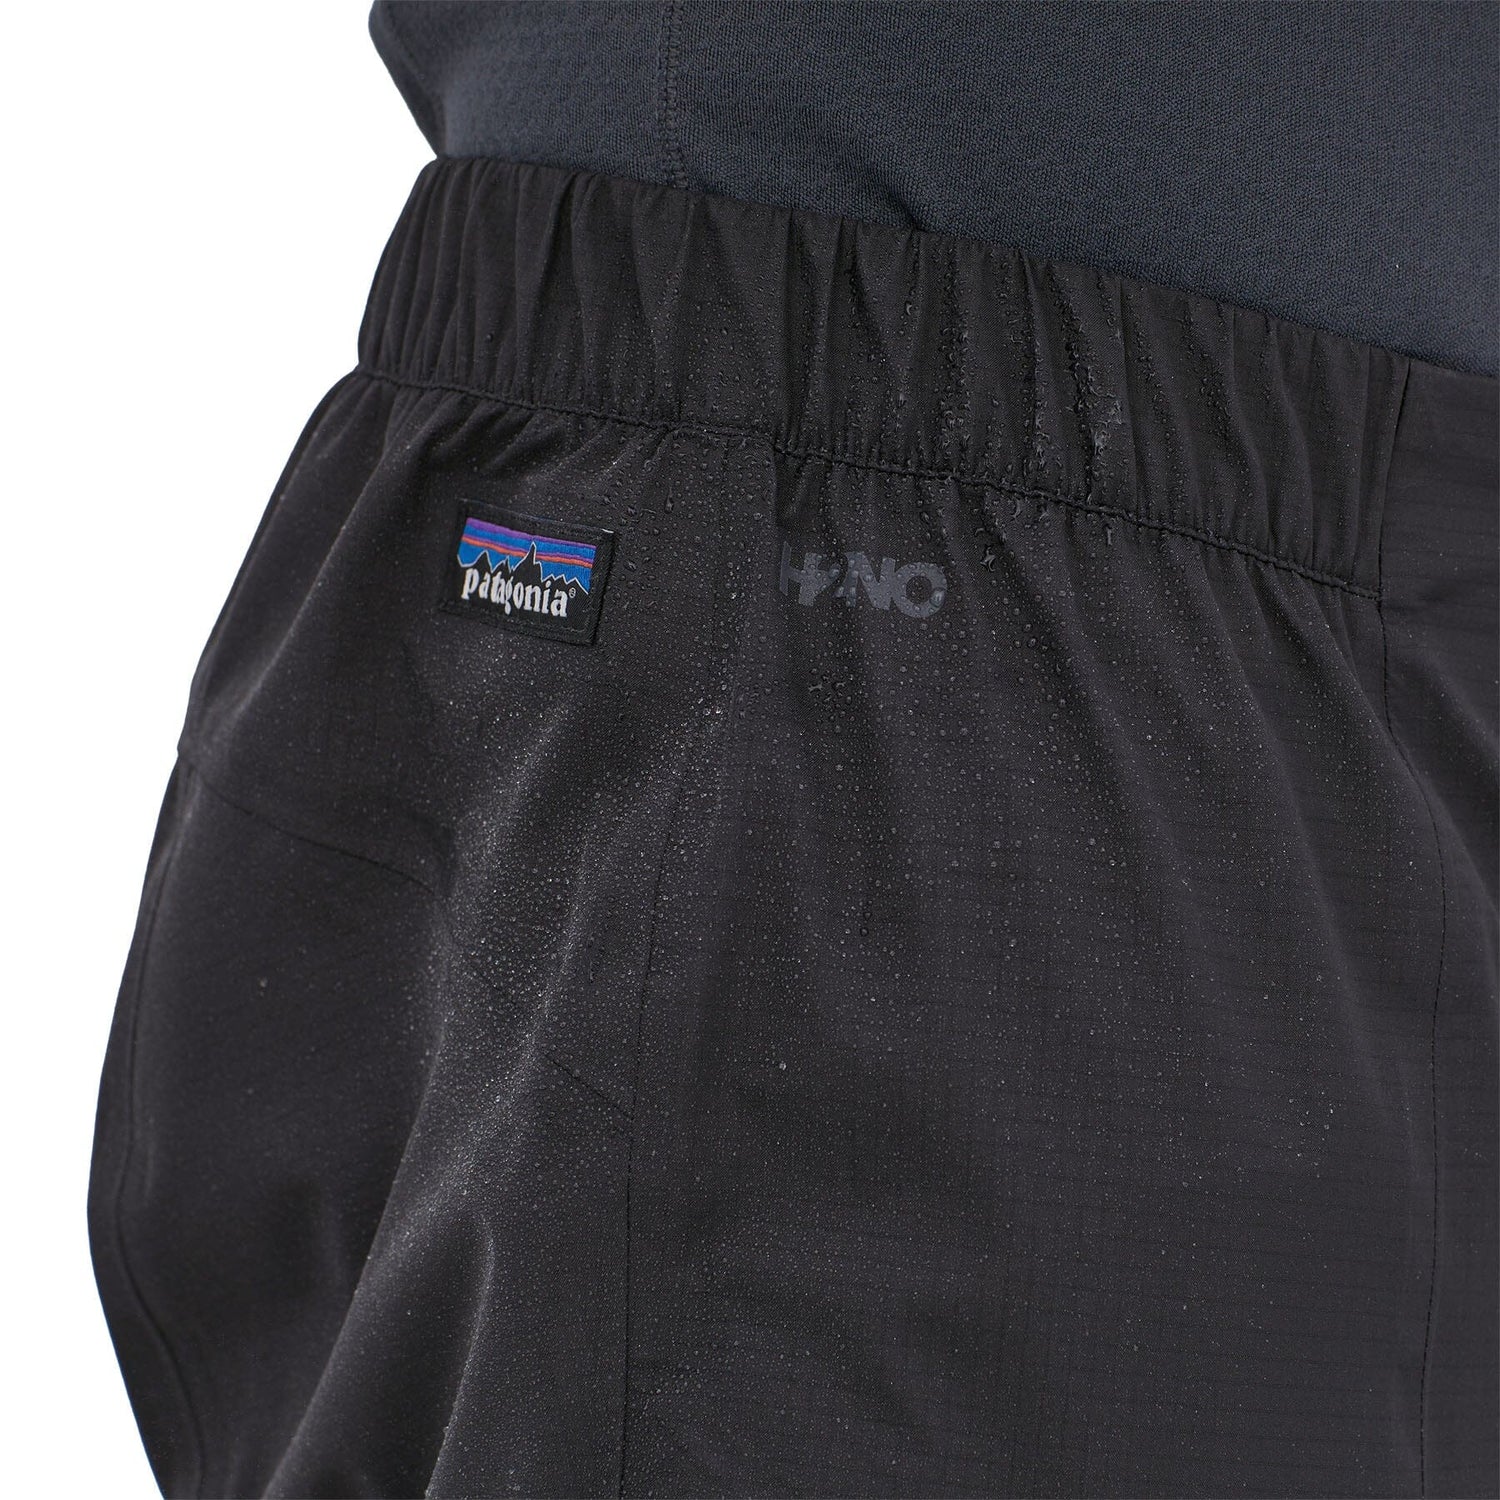 Patagonia M's Granite Crest Rain Pants - NetPlus® 100% recycled nylon Black Pants